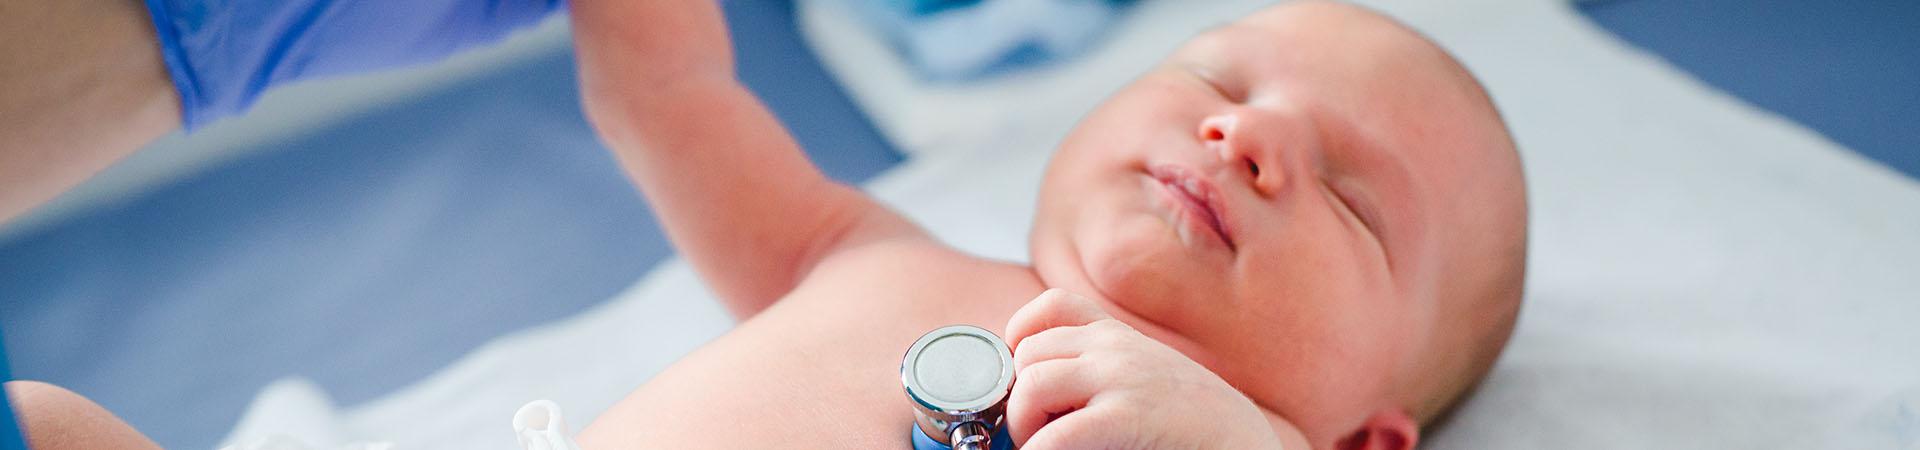 newborn baby with stethoscope